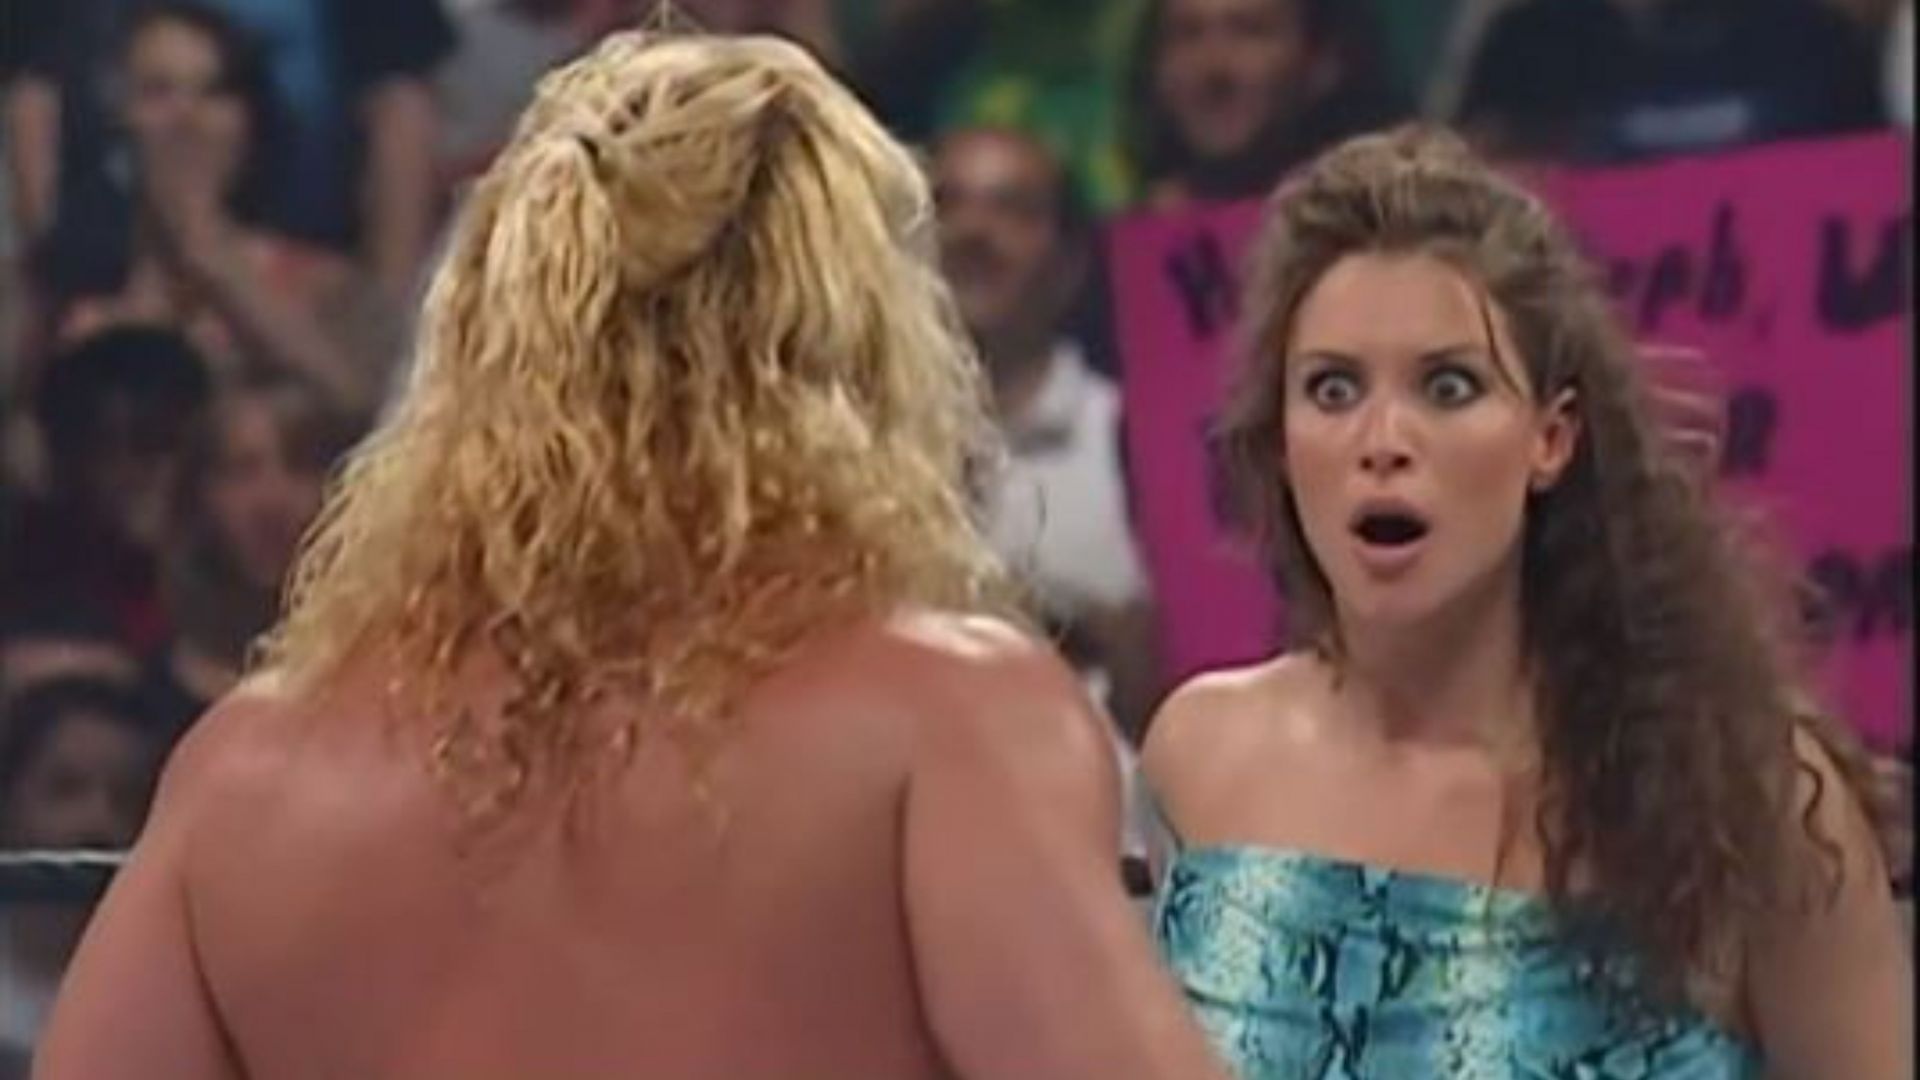 Chris Jericho kissed Stephanie McMahon twice on WWE TV